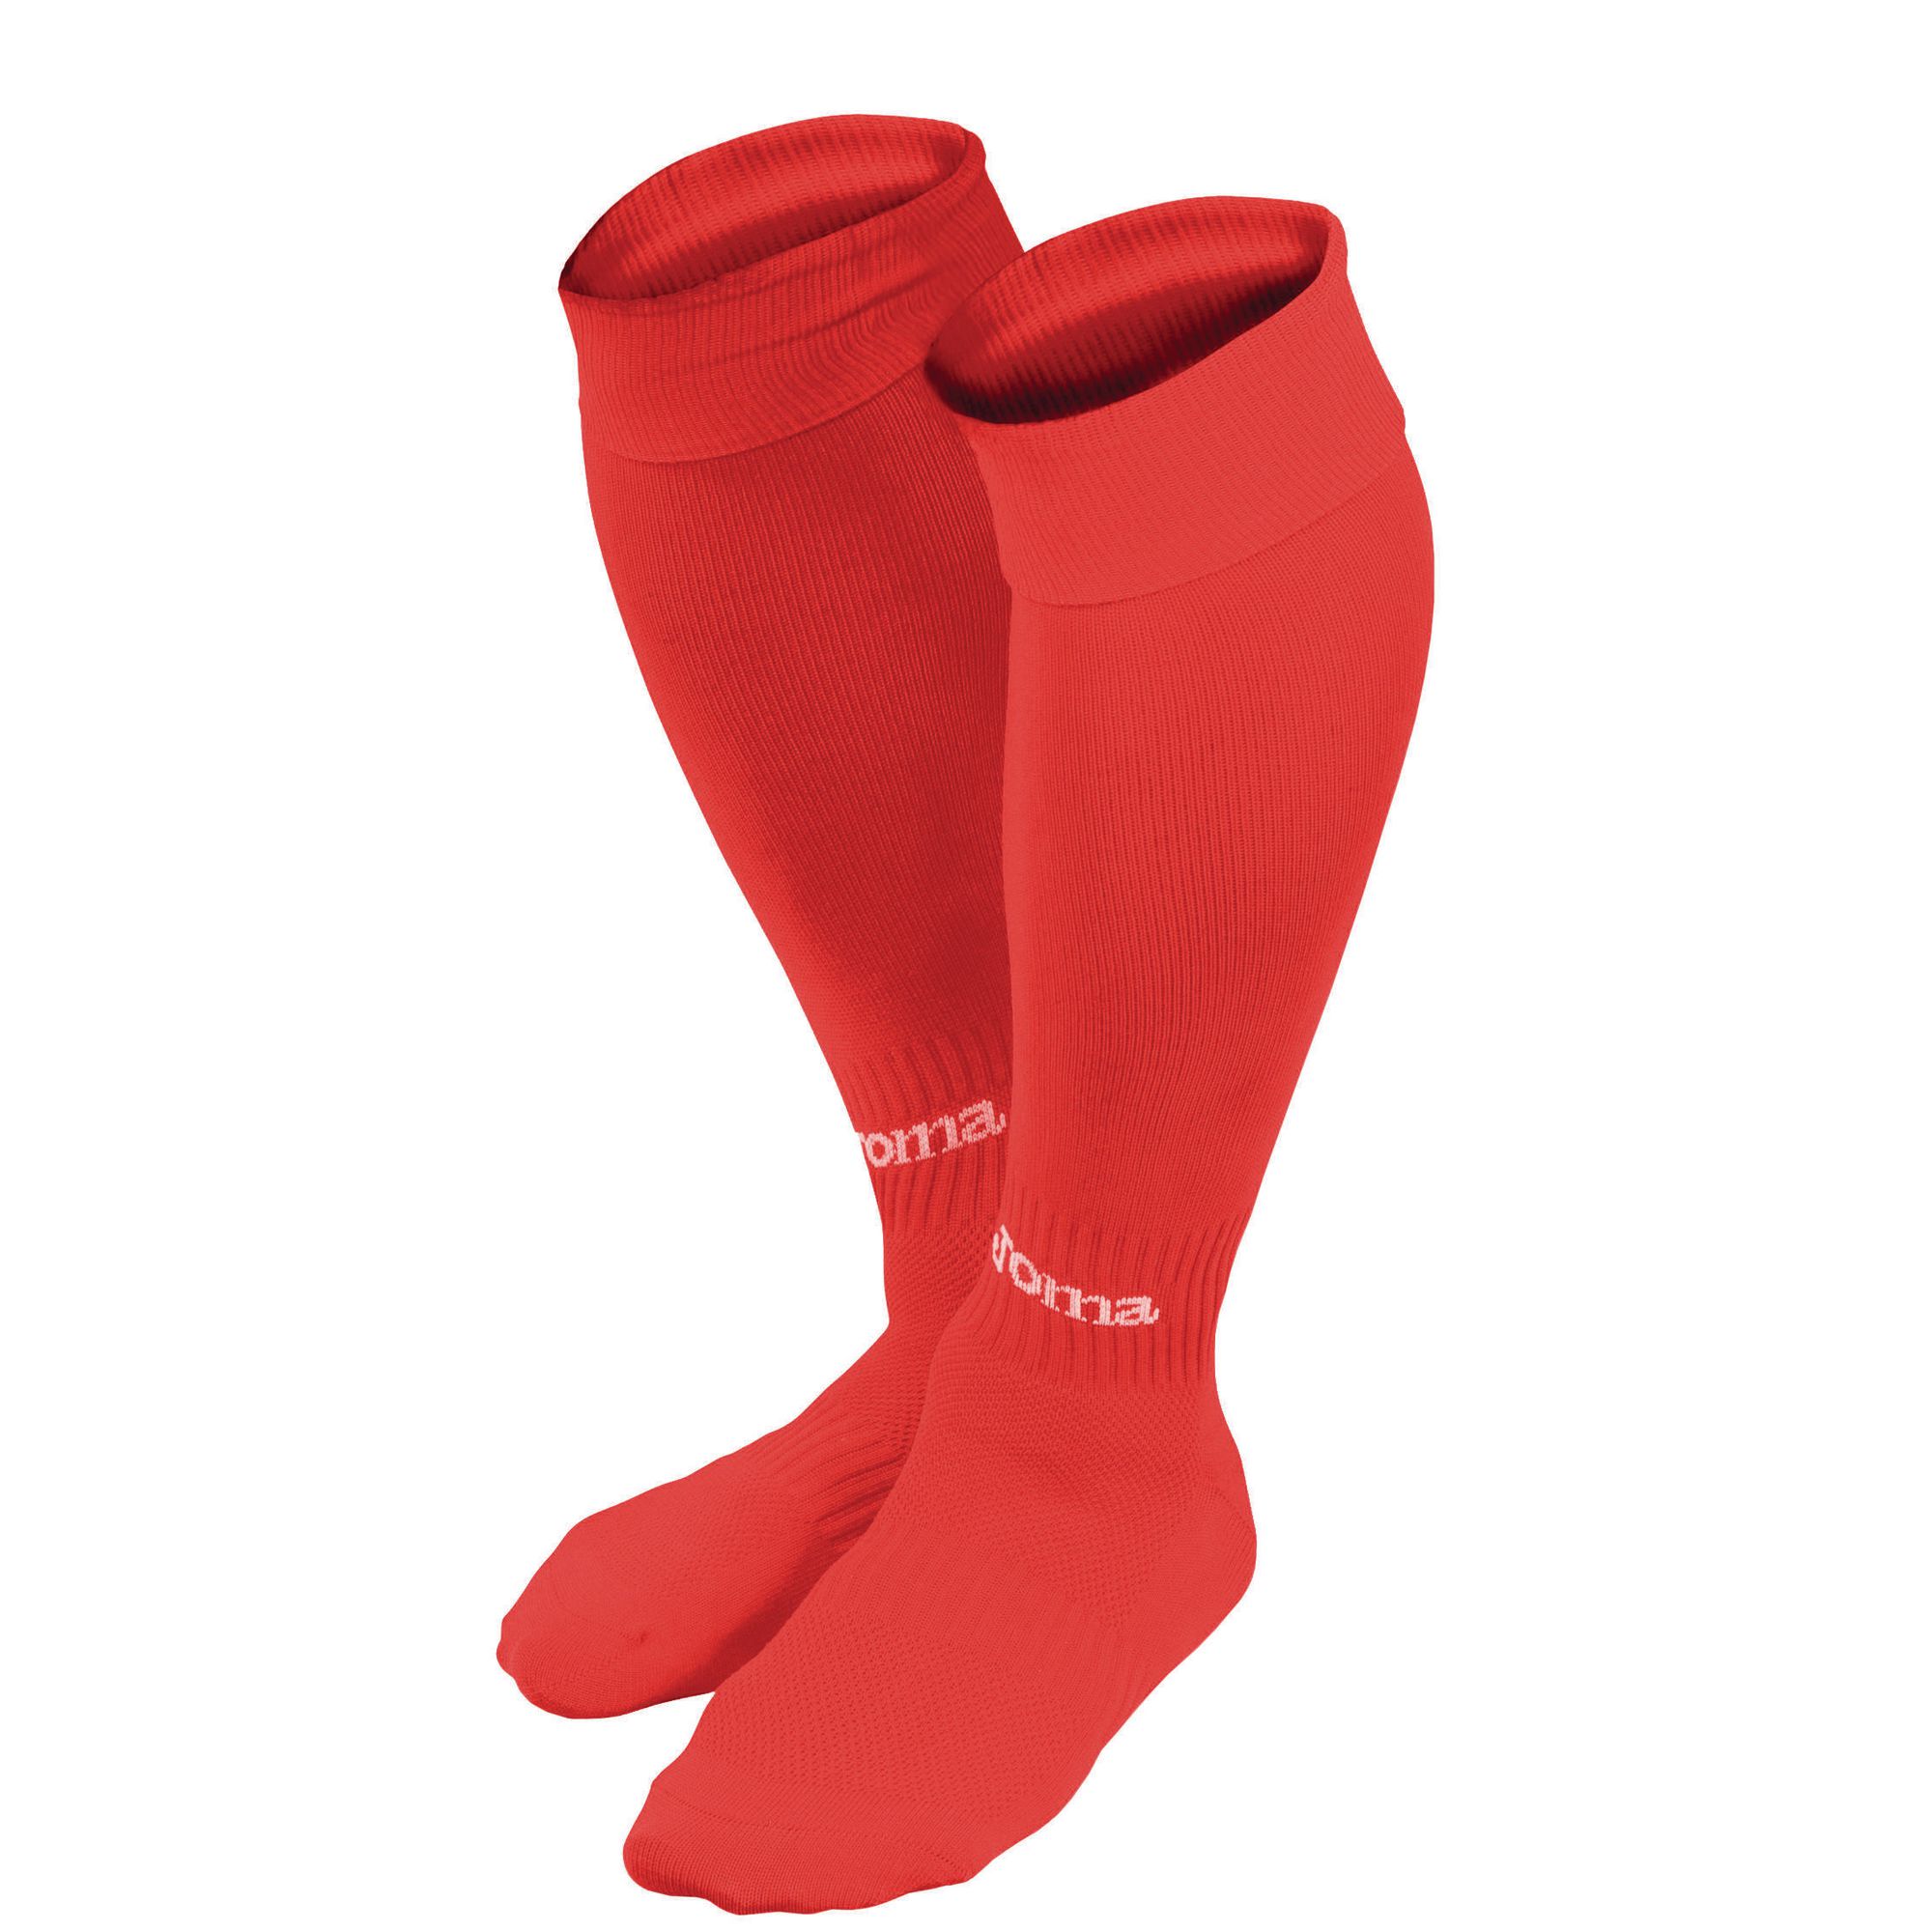 Joma Classic Socks Large 6-11 Vat Red